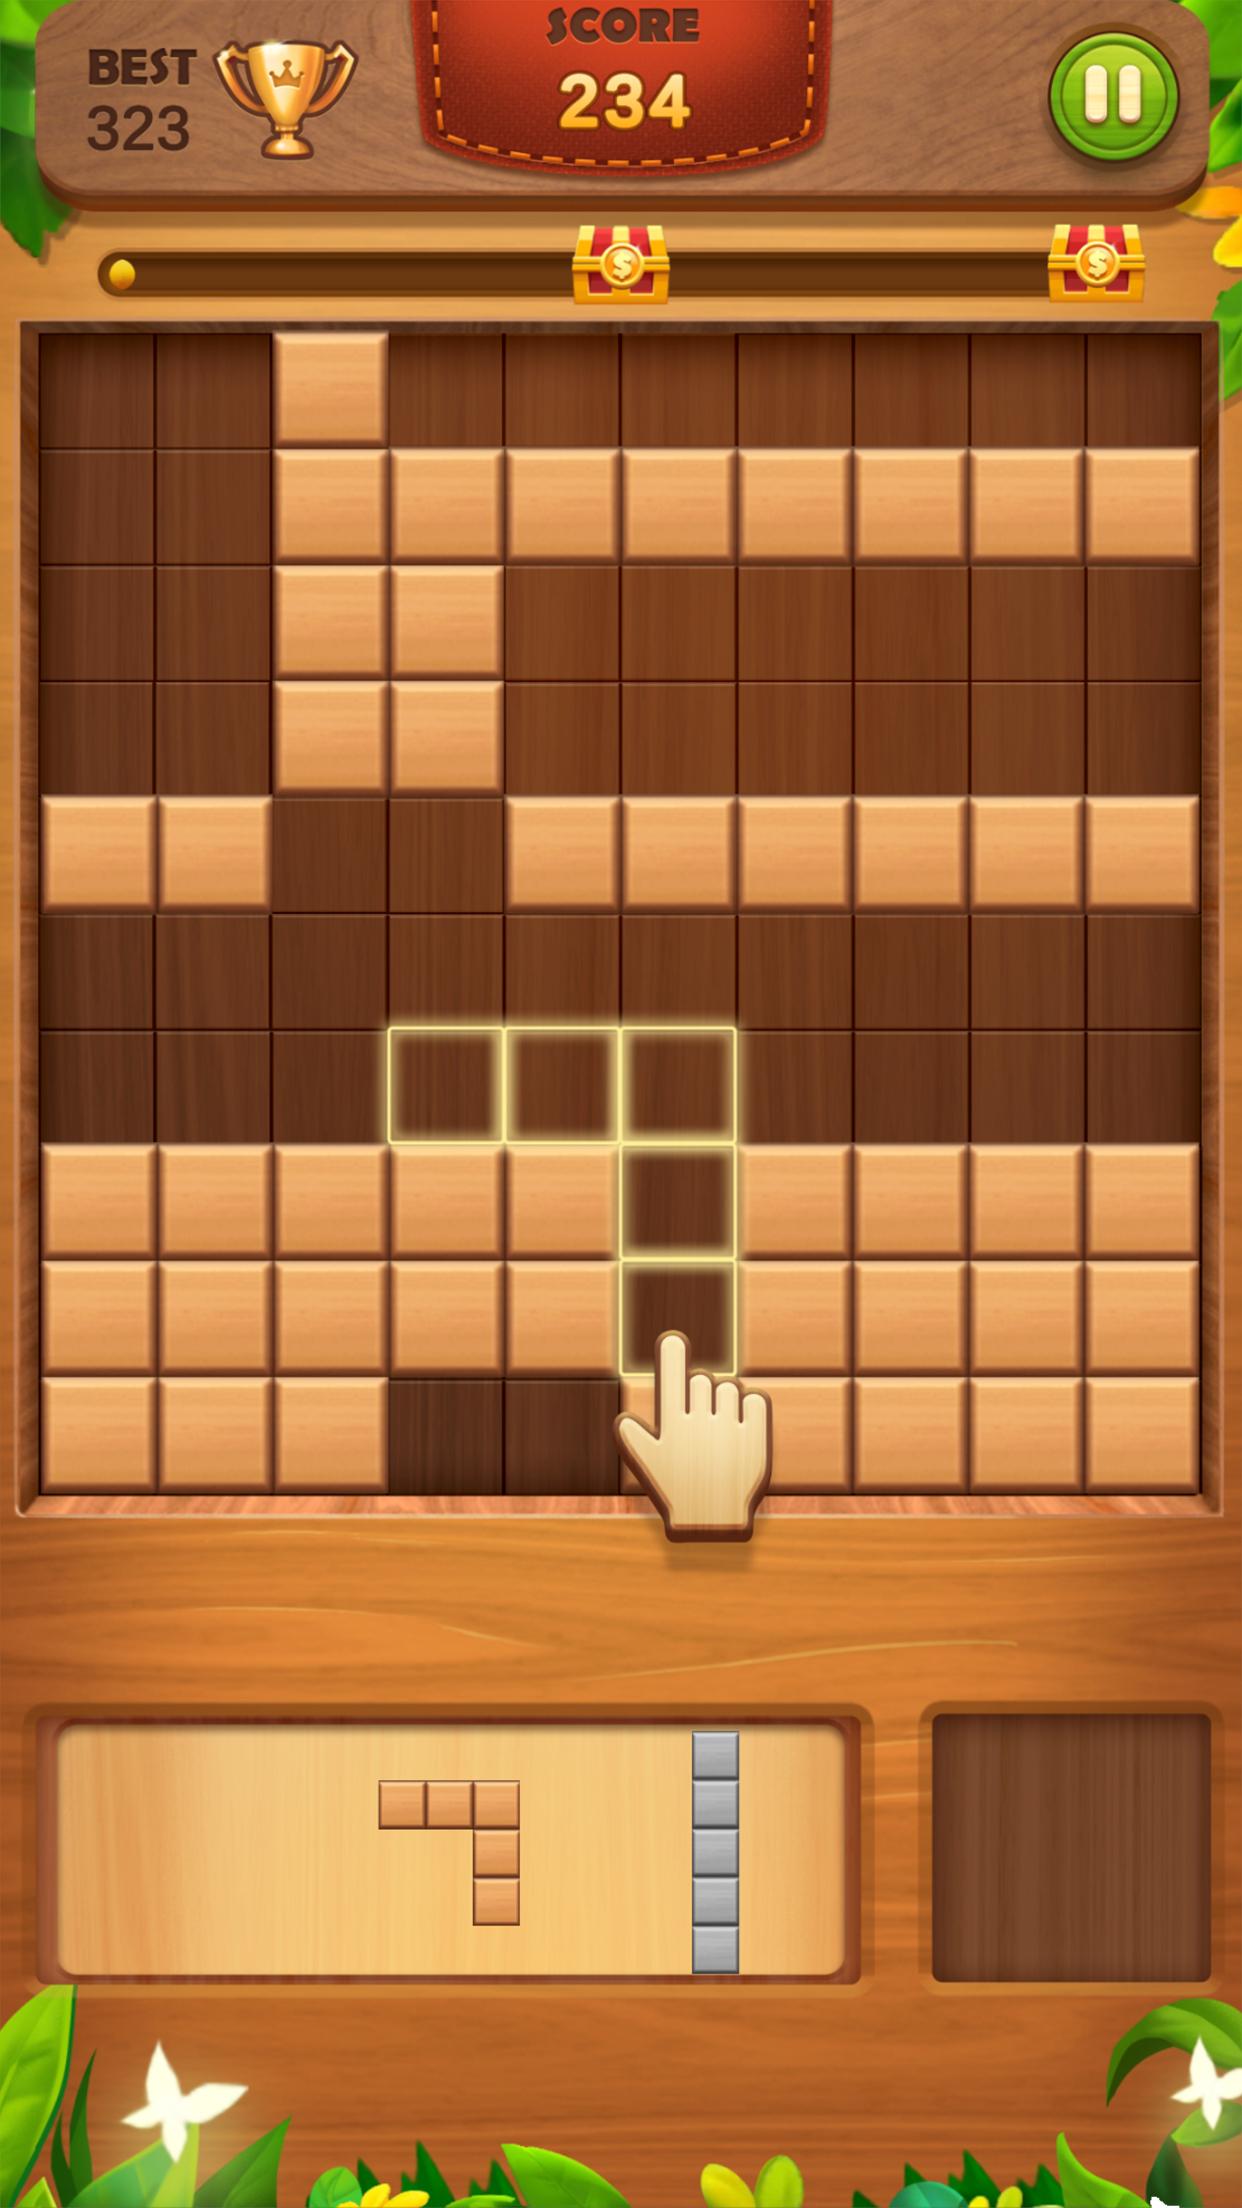 Block Puzzle Brain Training Test Wood Jewel Games 1.3.6 Screenshot 2